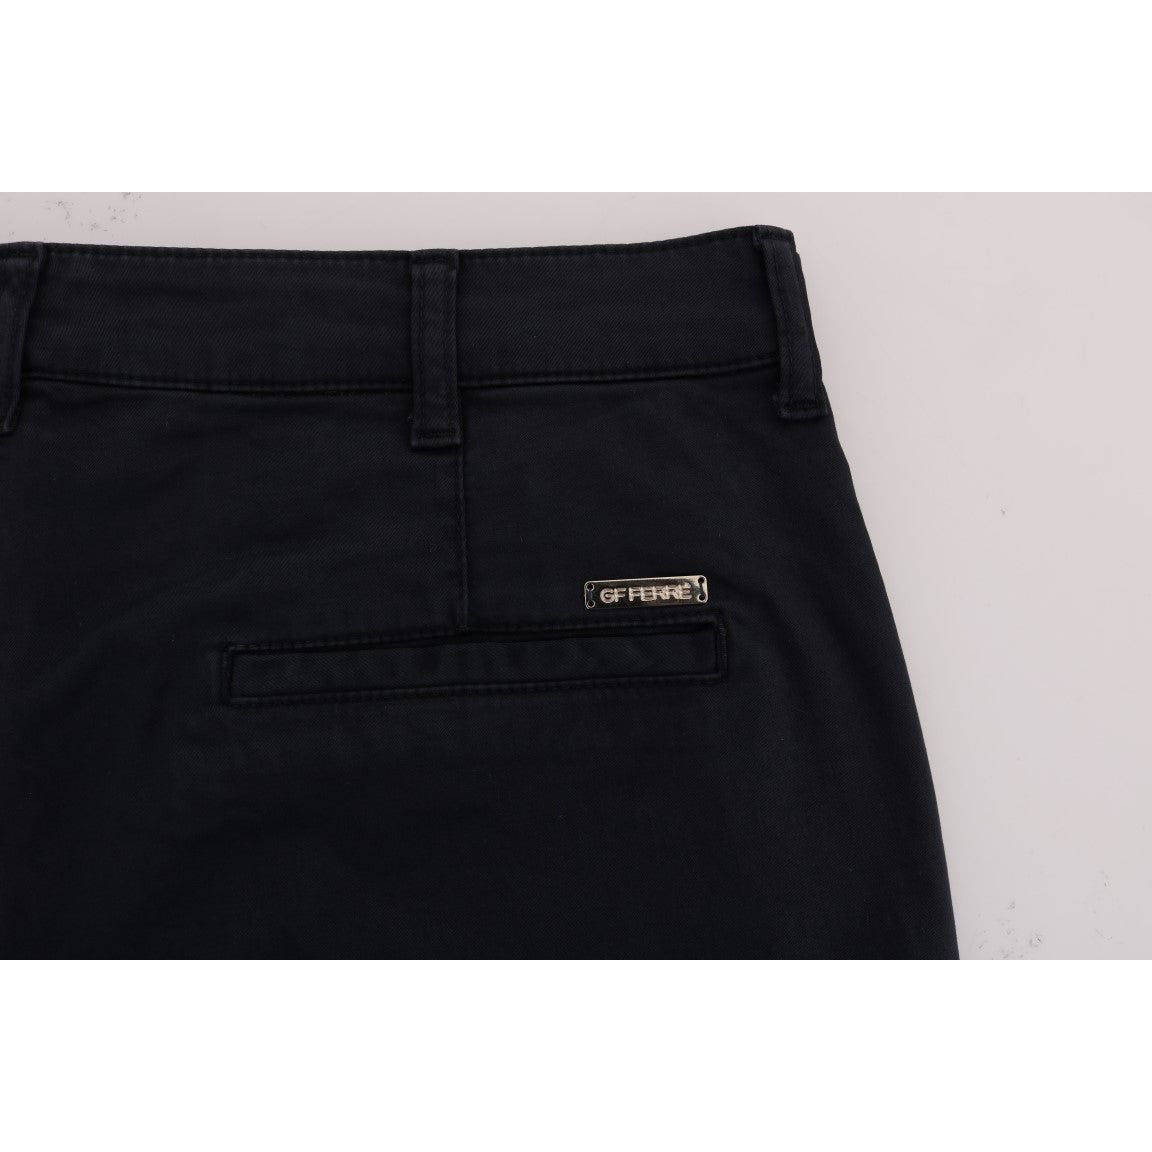 GF Ferre | Blue Cotton Stretch Chinos Pants | McRichard Designer Brands